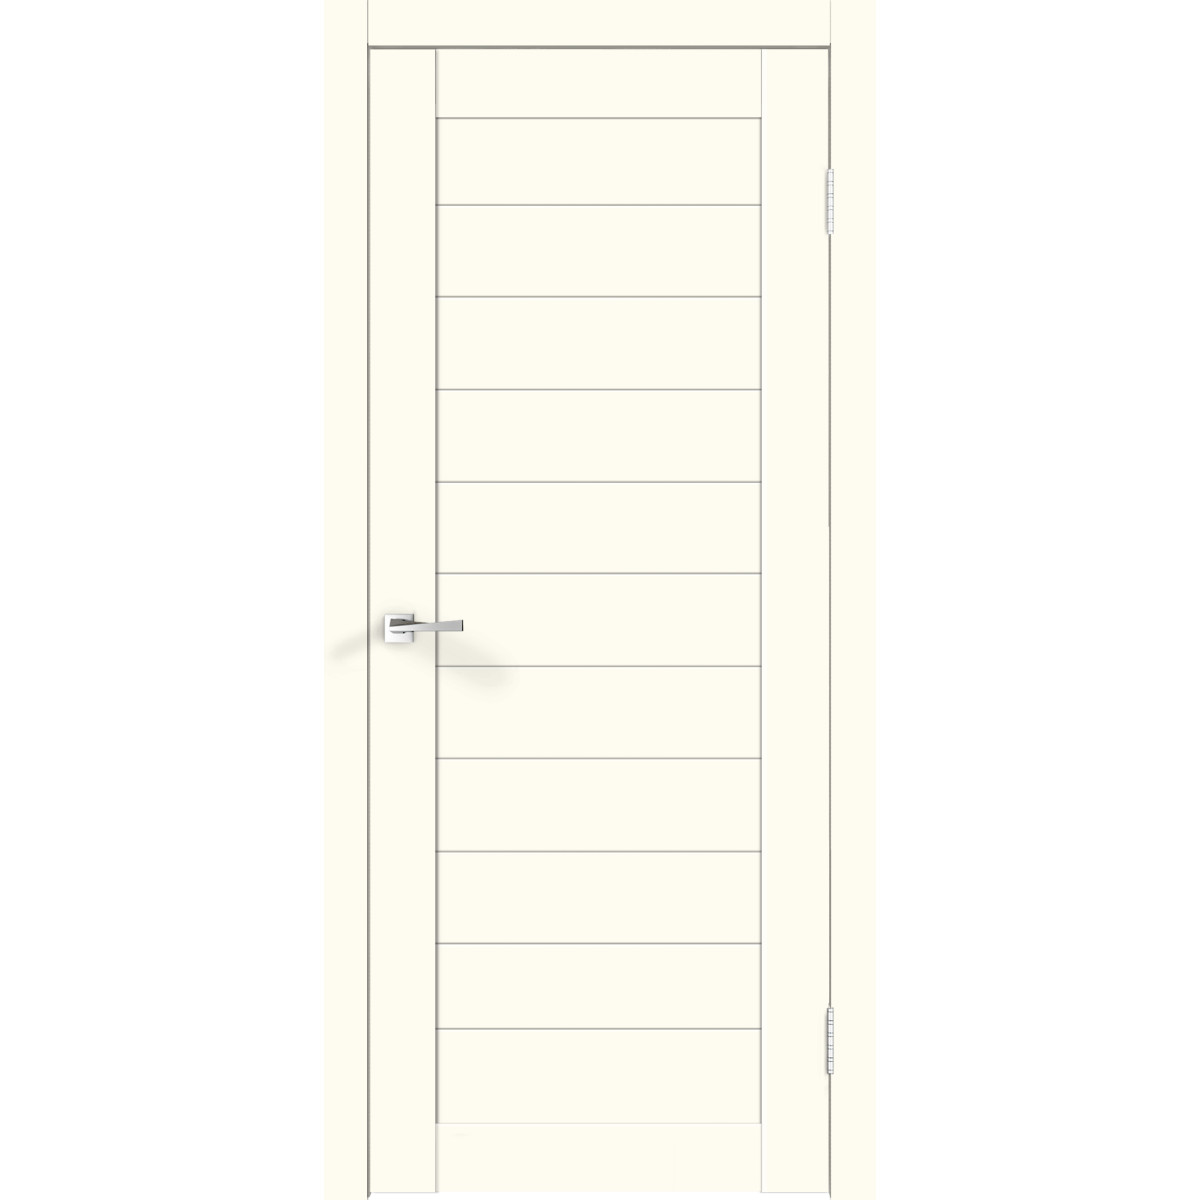 Дверь межкомнатная под покраску Симпл 60х200 см с фурнитурой, цвет белый